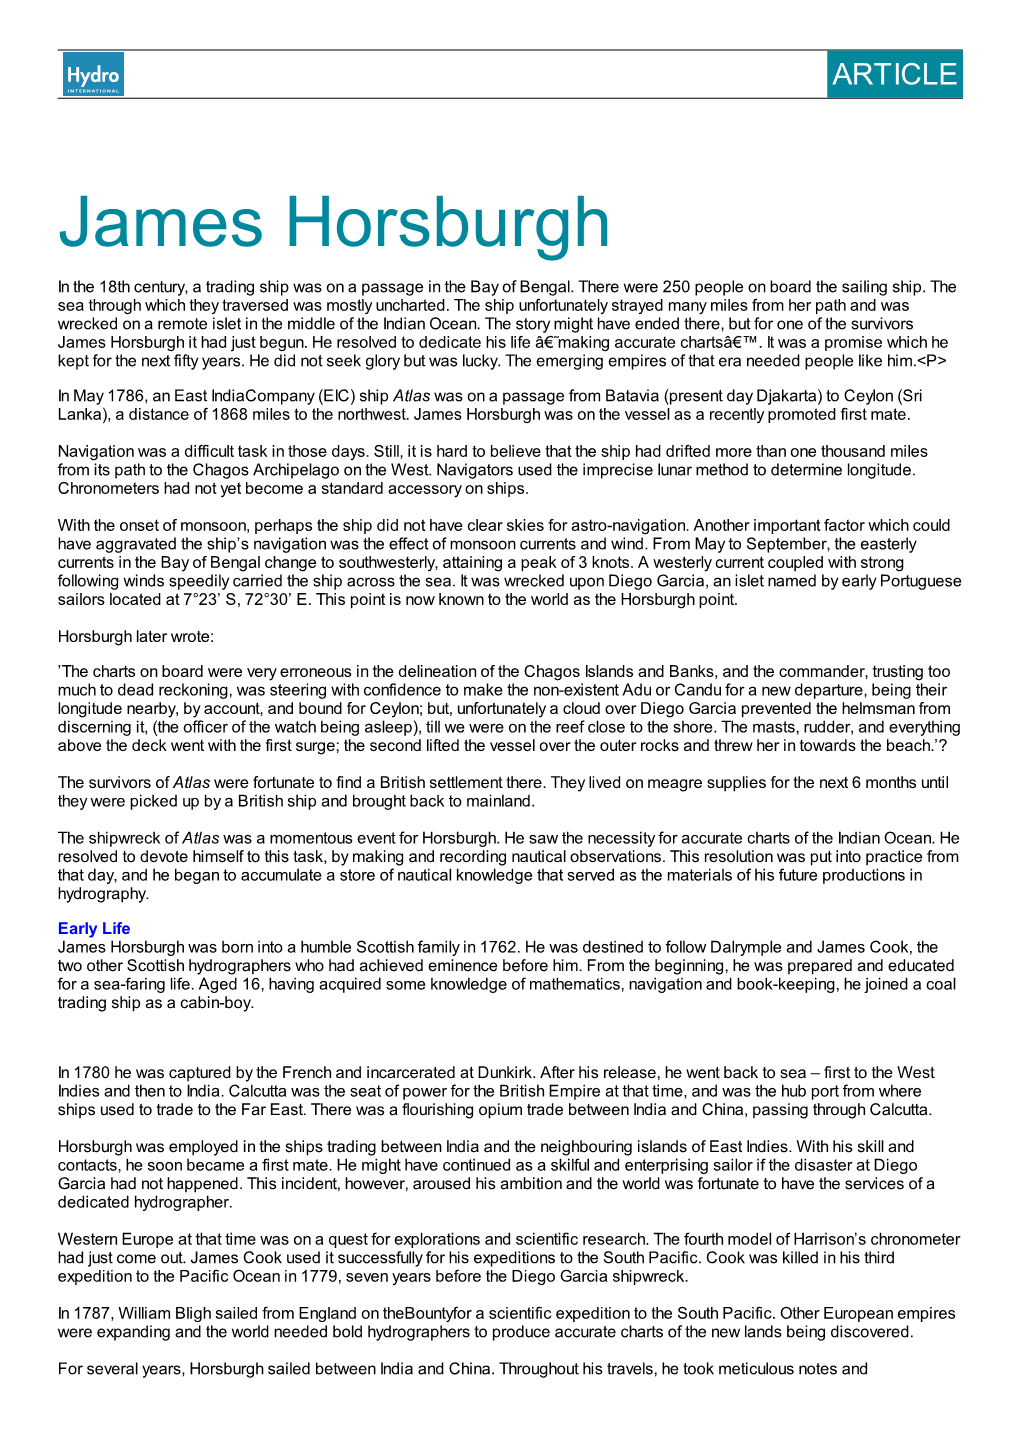 James Horsburgh